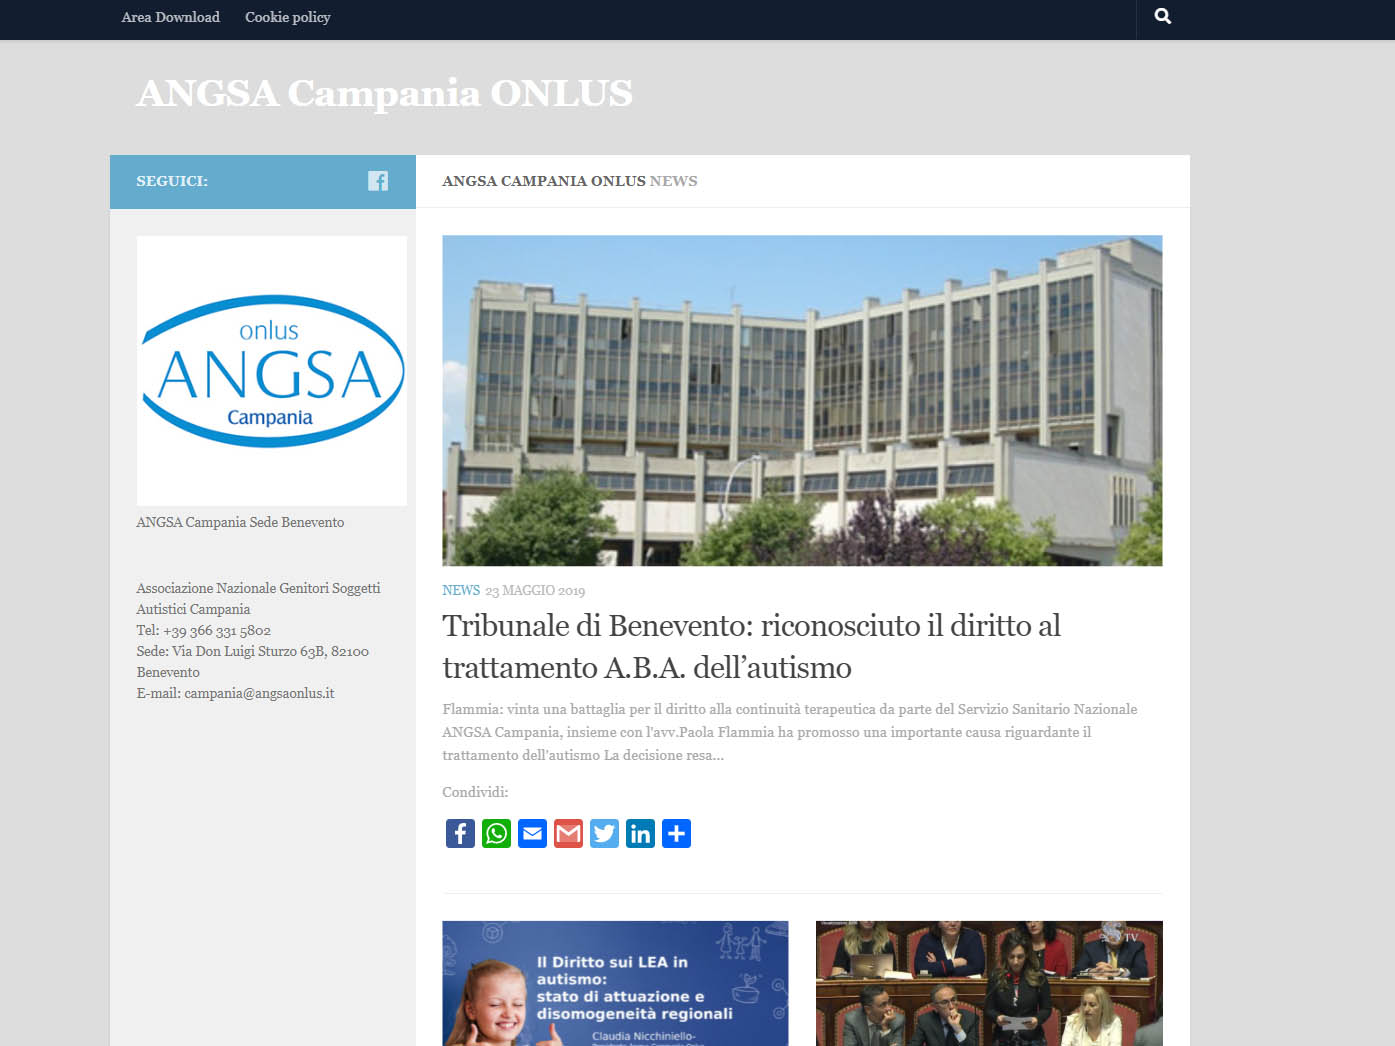 Sito ufficiale ANGSA Campania www.angsacampania.it